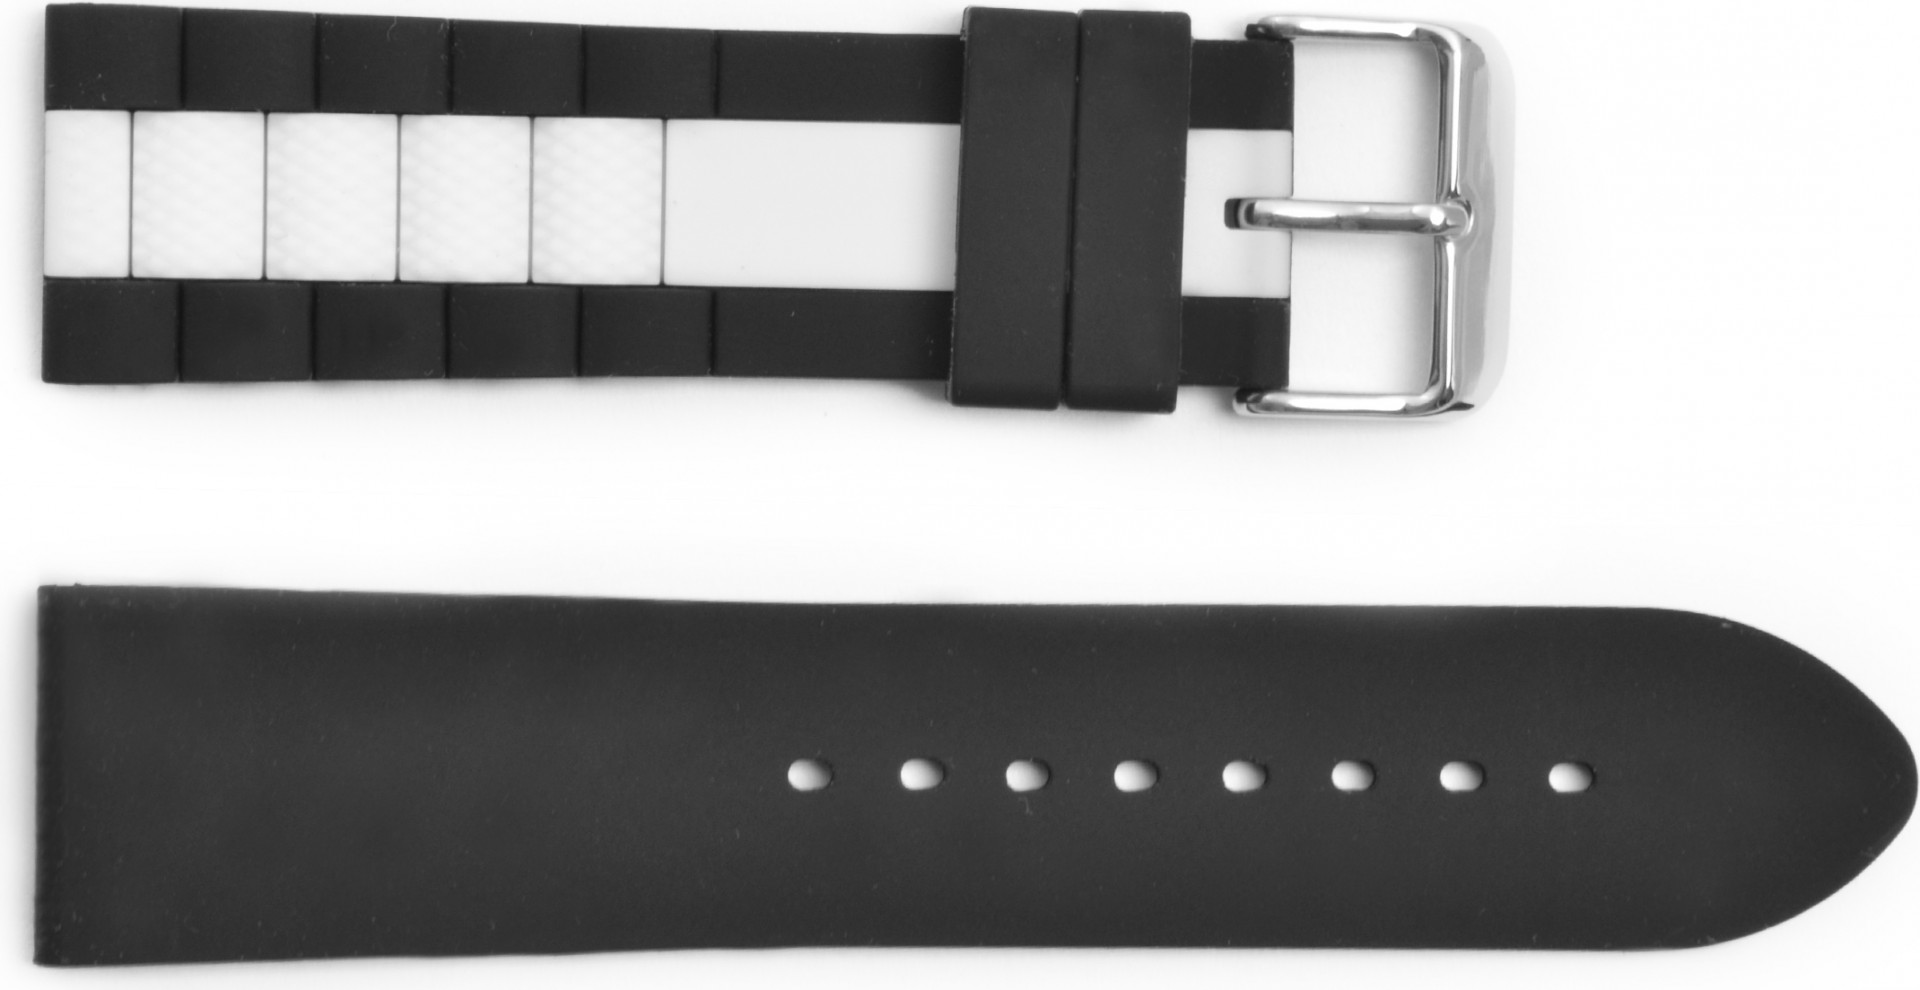   Uhrenarmband Explorer Dornschließe - Silikon - schwarz/weiß ohne Naht 